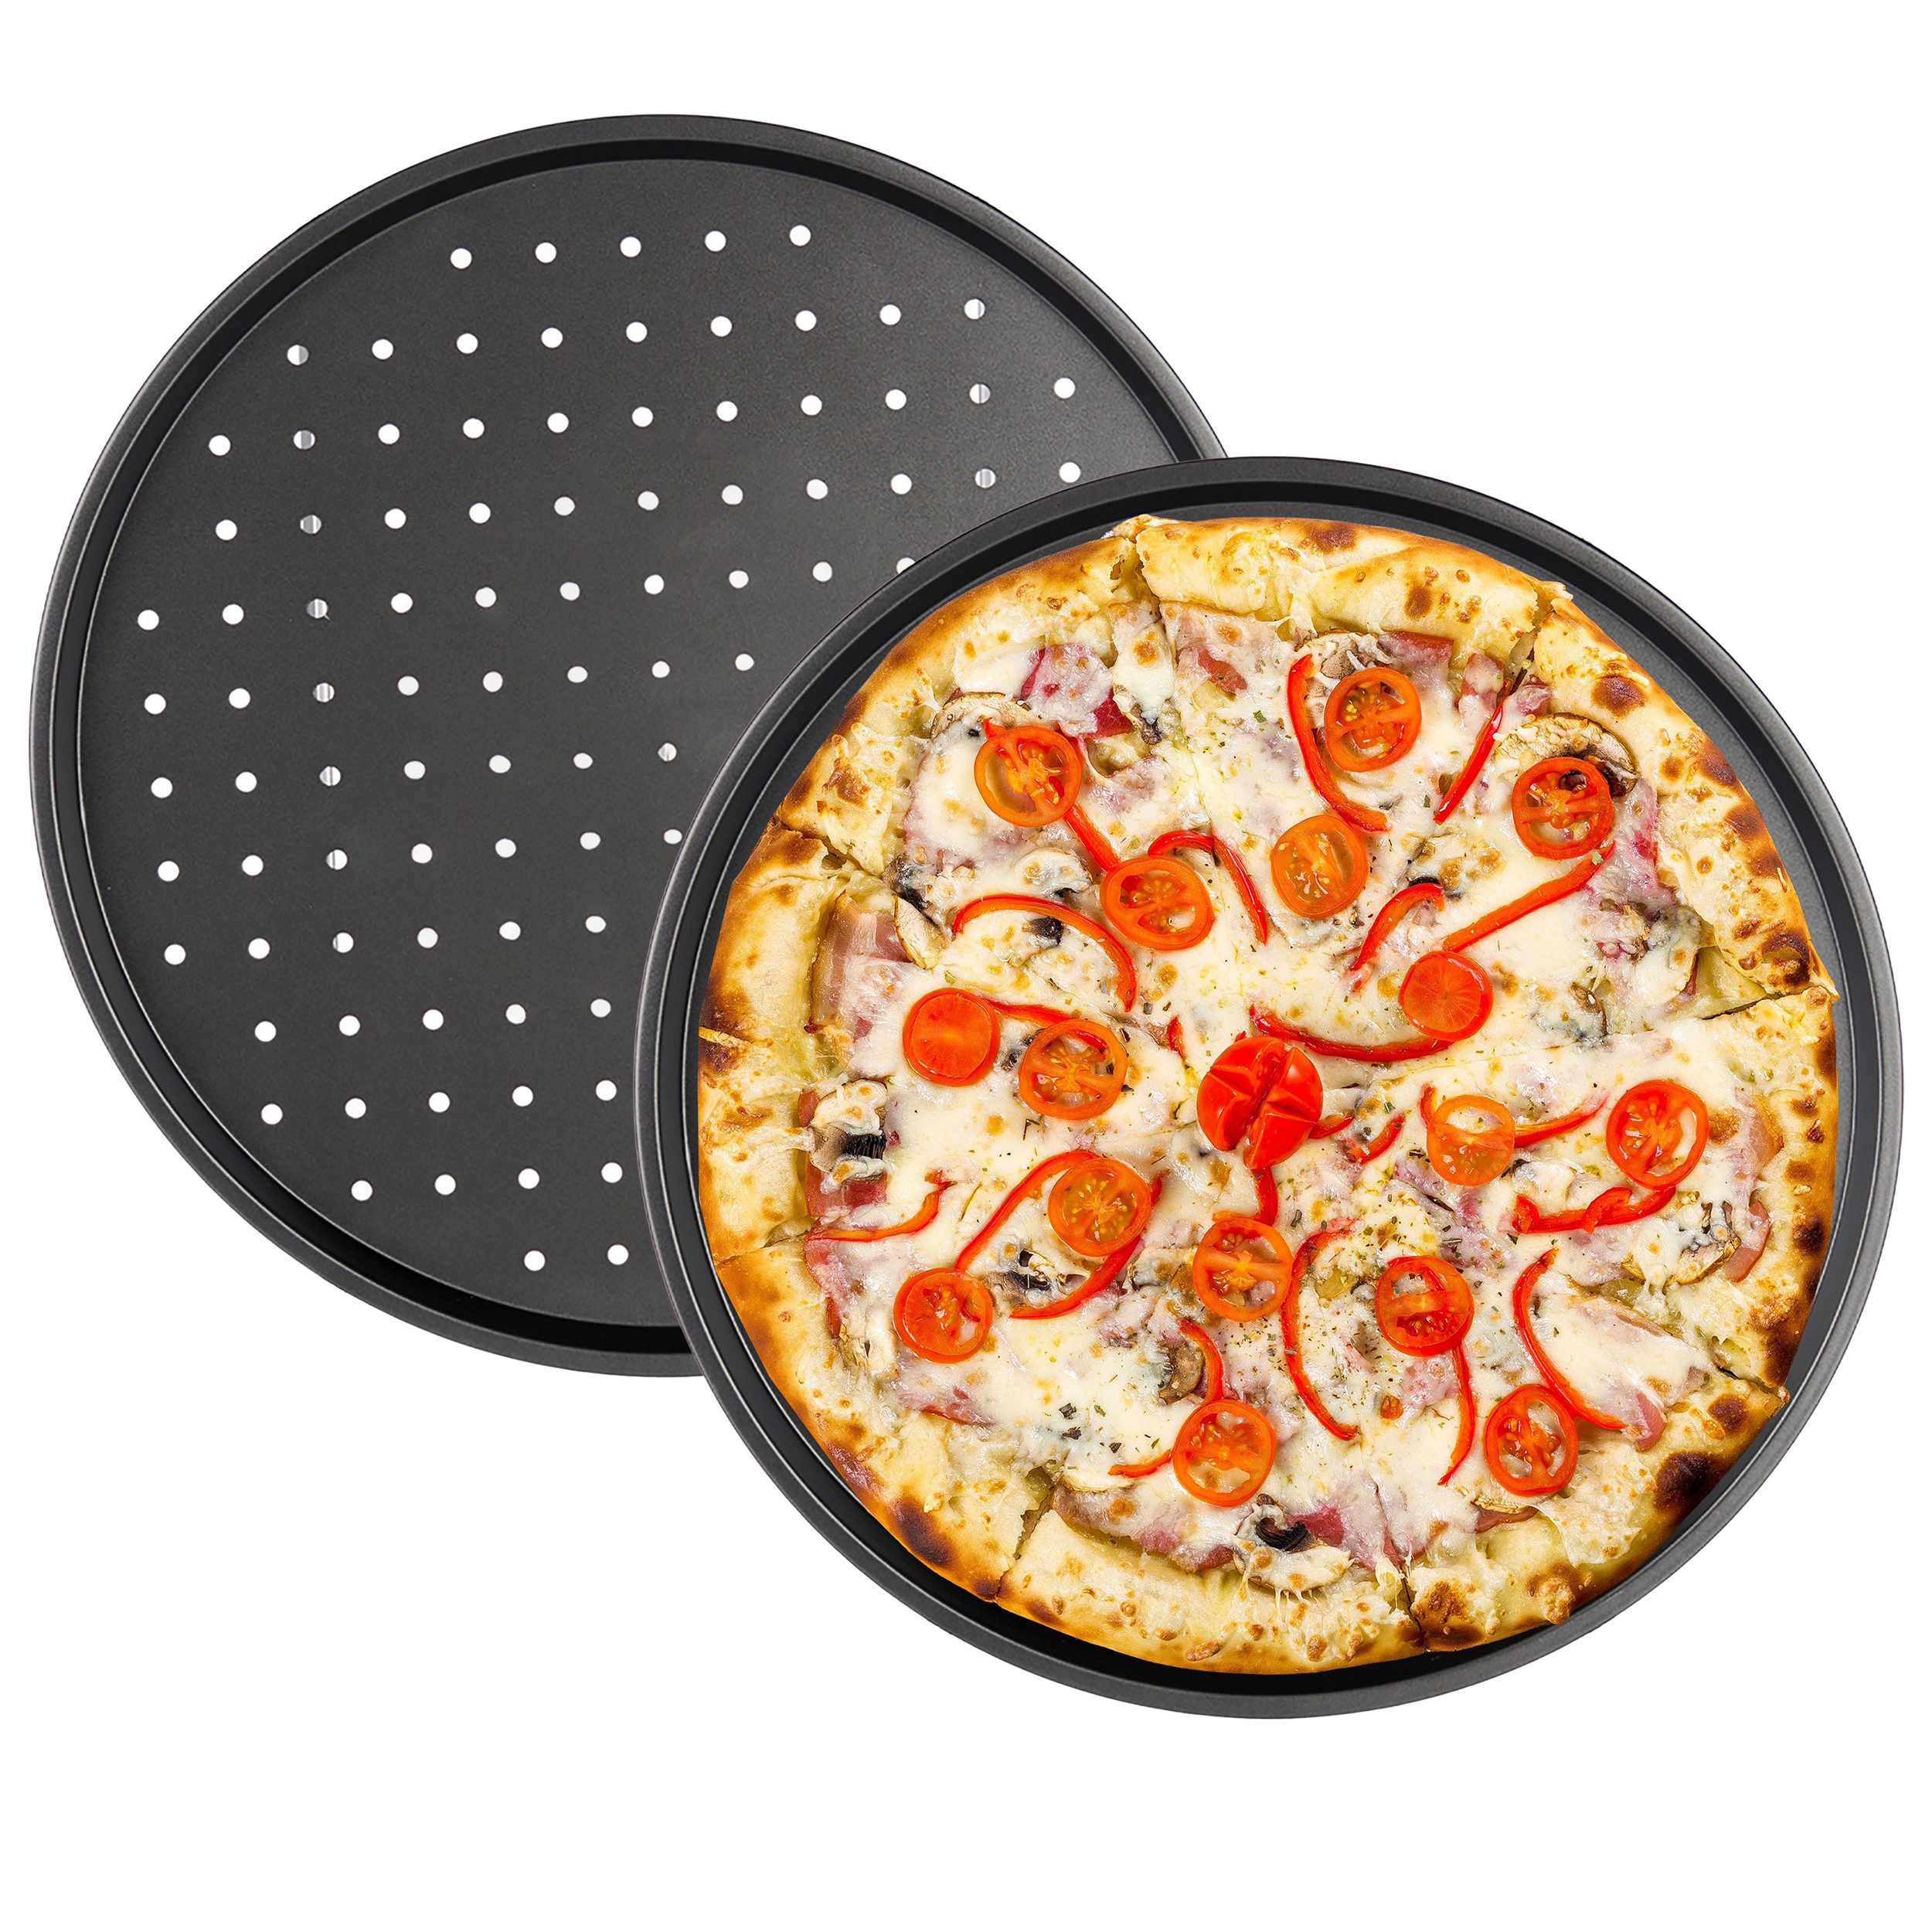 Annastore Pizzablech aus Carbonstahl mit Löchern antihaftbeschichtet - Backblech für Pizza, (2-St), Ø 33 cm